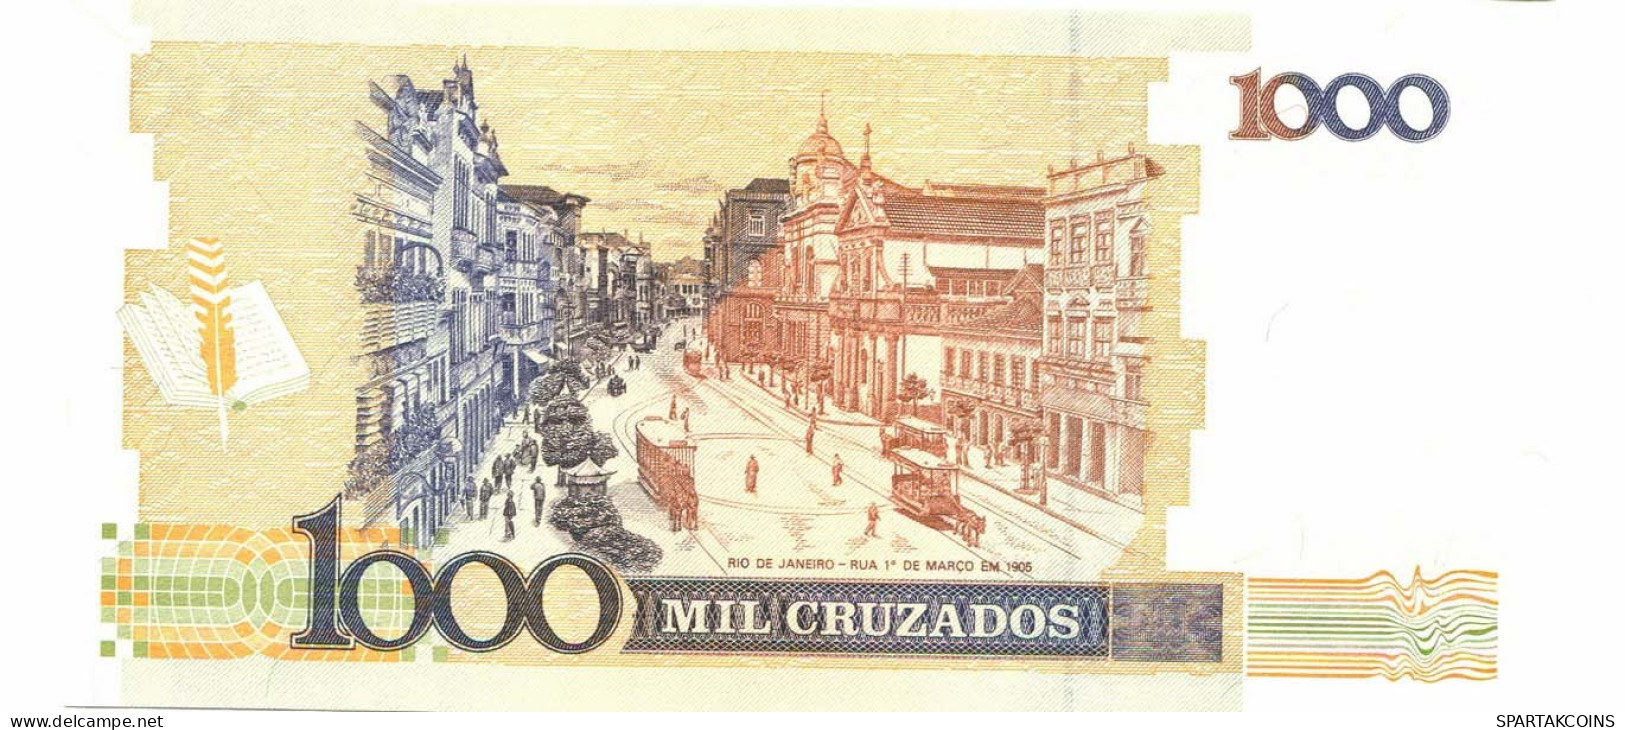 BRASIL 1000 CRUZADOS 1989 UNC Paper Money Banknote #P10872.4 - Lokale Ausgaben